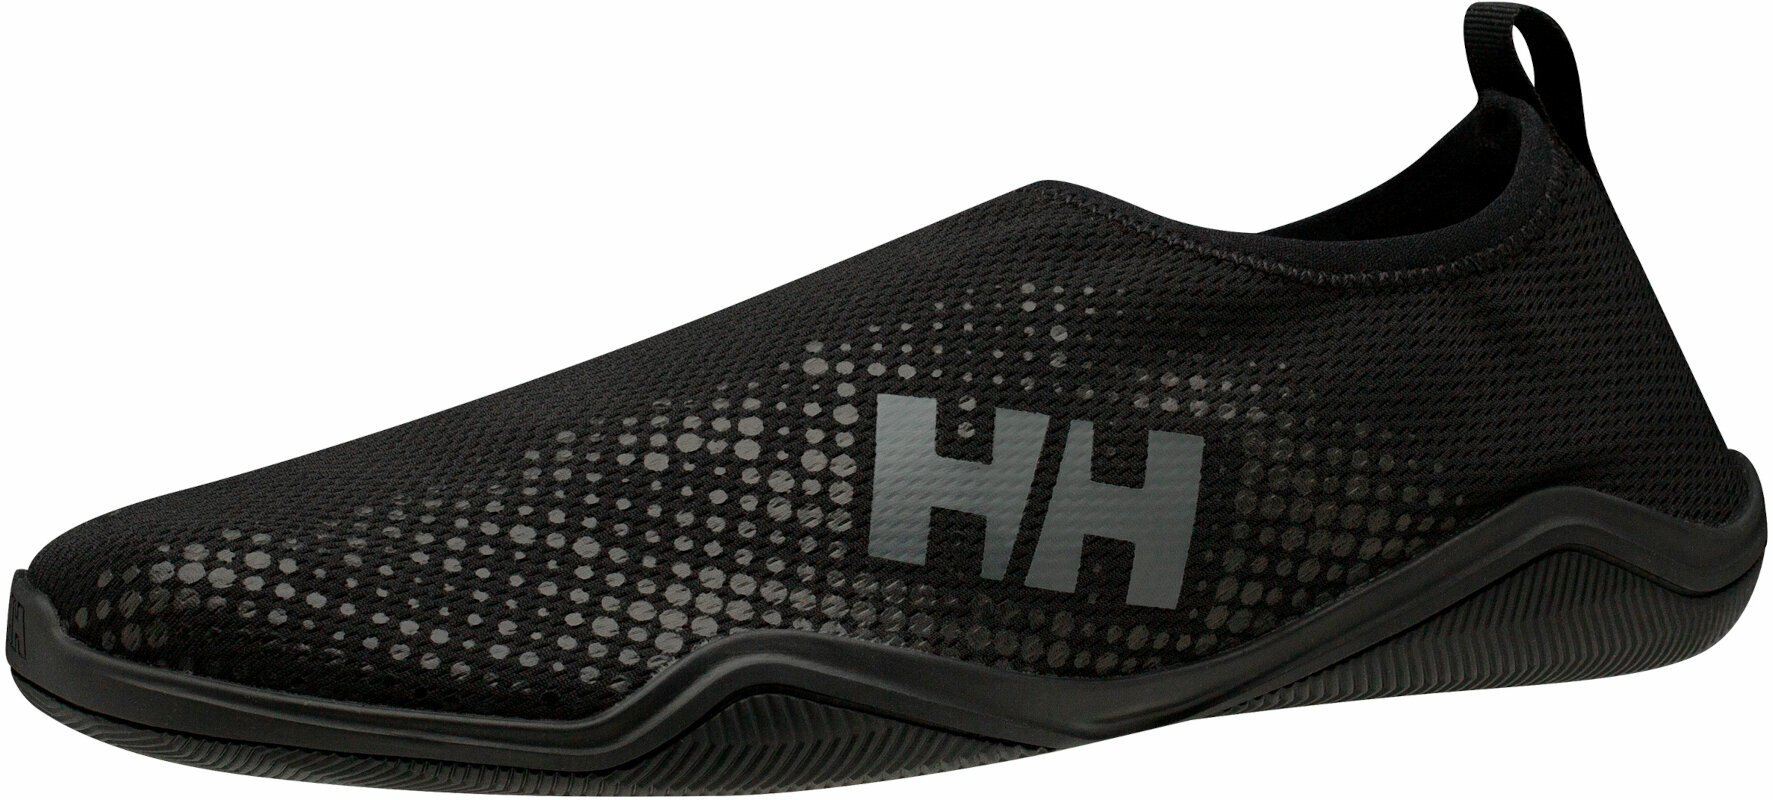 Scarpe uomo Helly Hansen Men's Crest Watermoc Black/Charcoal 42